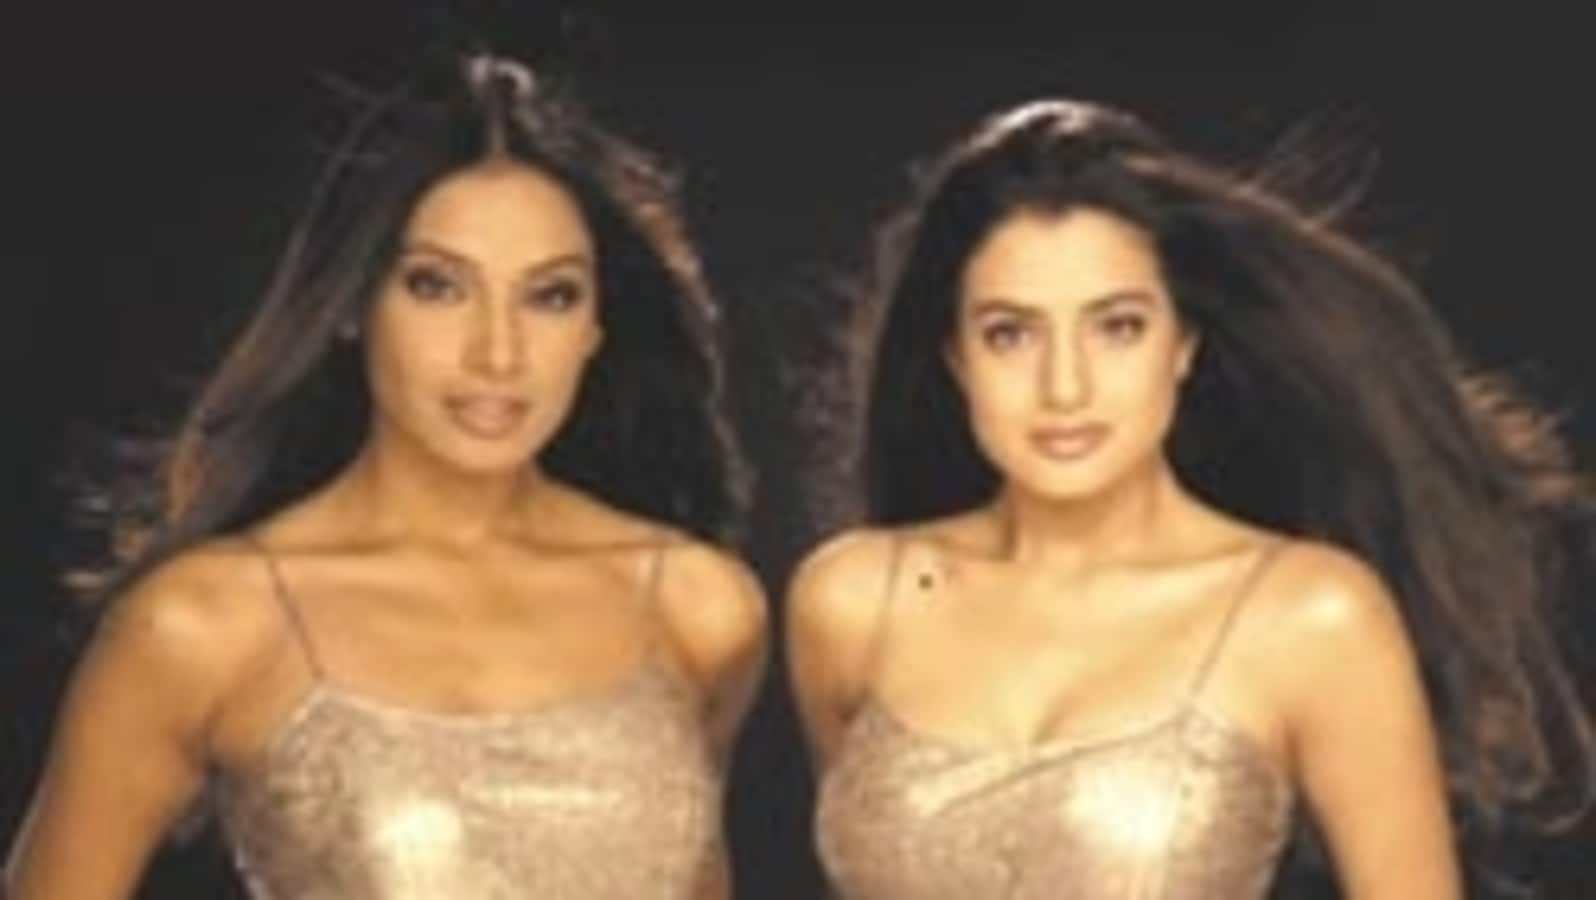 Ameesh Patel Sxs Videos - When Bipasha Basu said Ameesha Patel was 'too petite' for Jism 2: 'You need  aâ€¦' | Bollywood - Hindustan Times